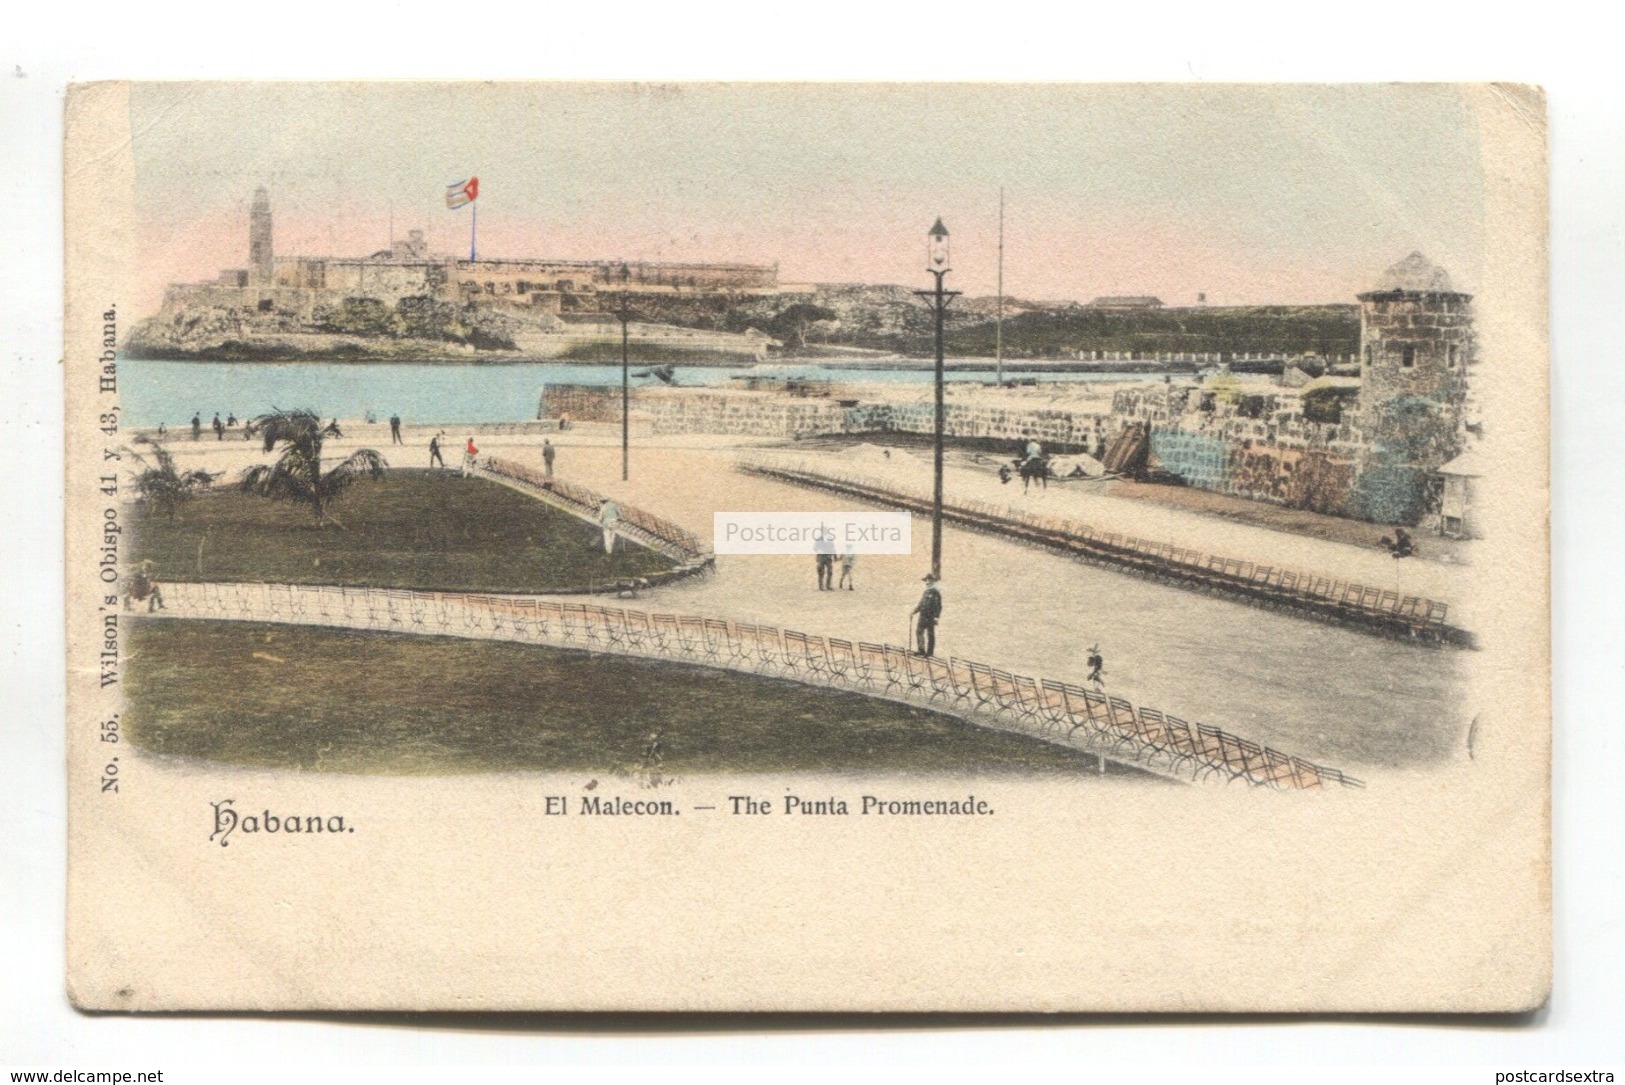 Havana / Habana - El Malecon, The Punta Promenade - Cuba Postcard Sent 1904 From USA To England - Cuba